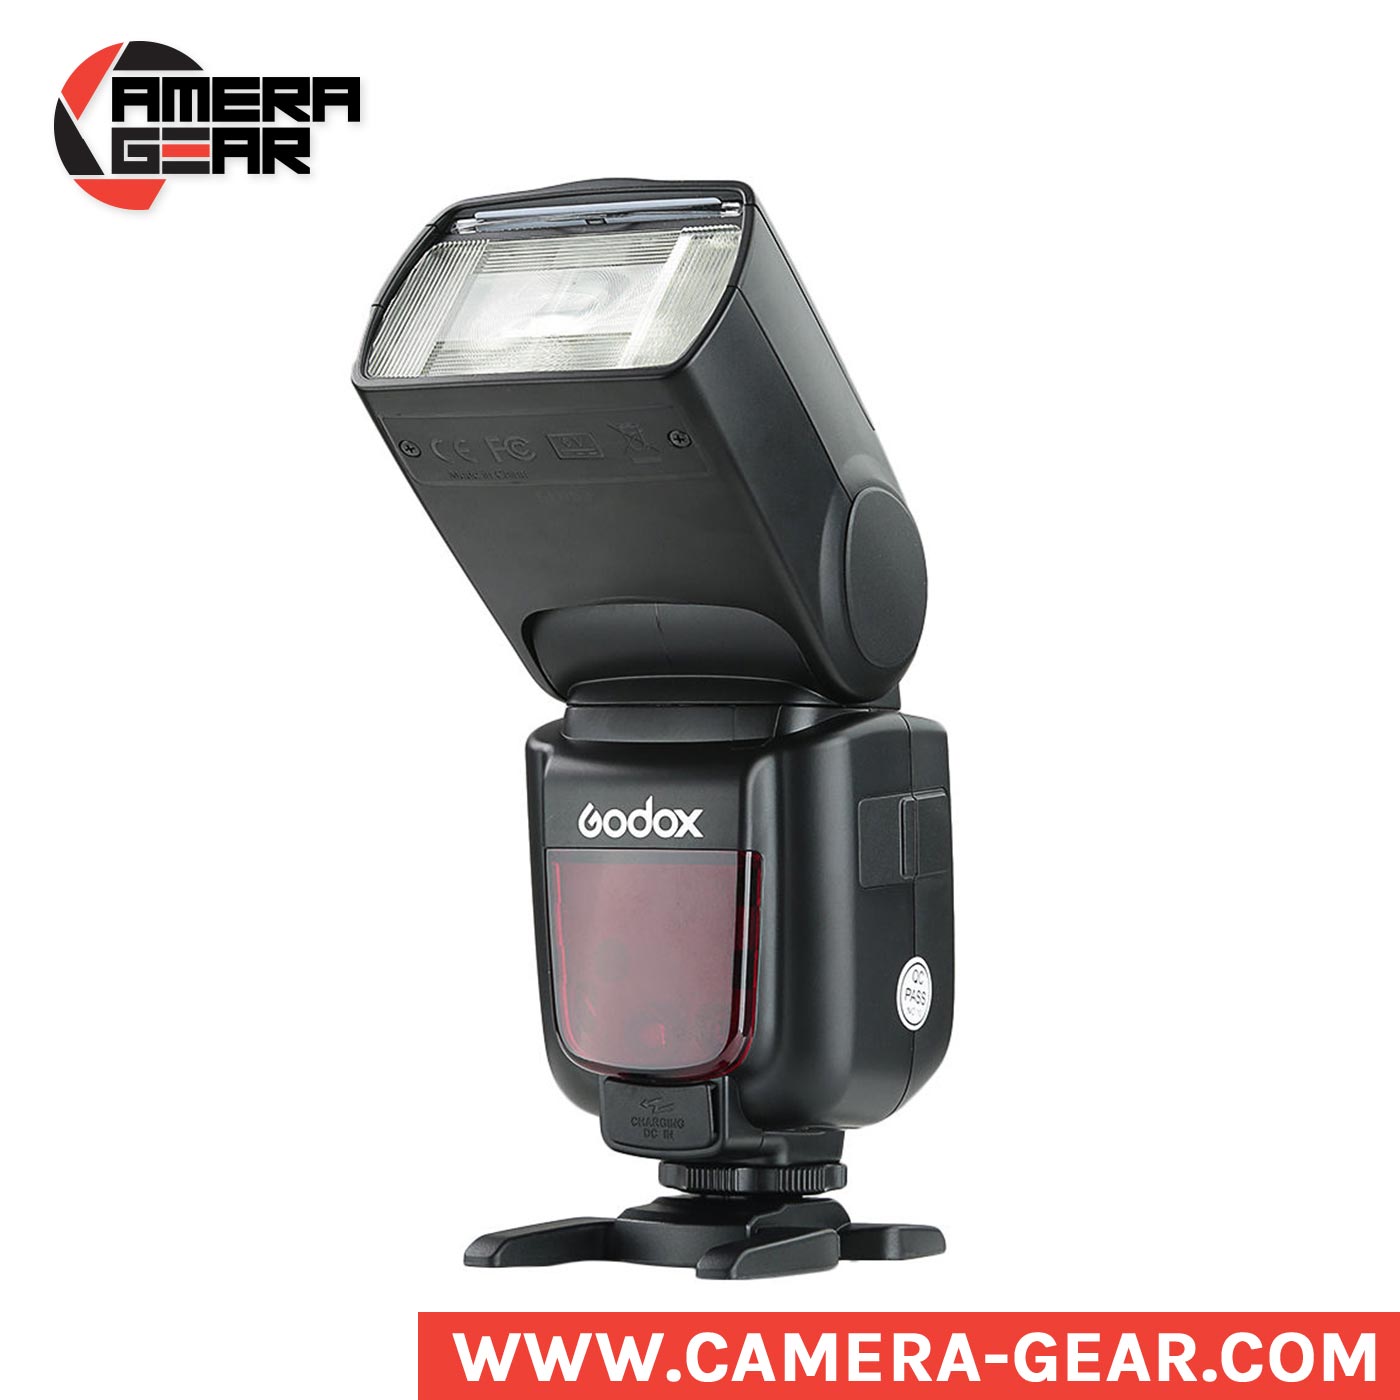 Godox TT600 Manual Speedlite flash with 2.4GHz transceiver built-in  Camera Gear